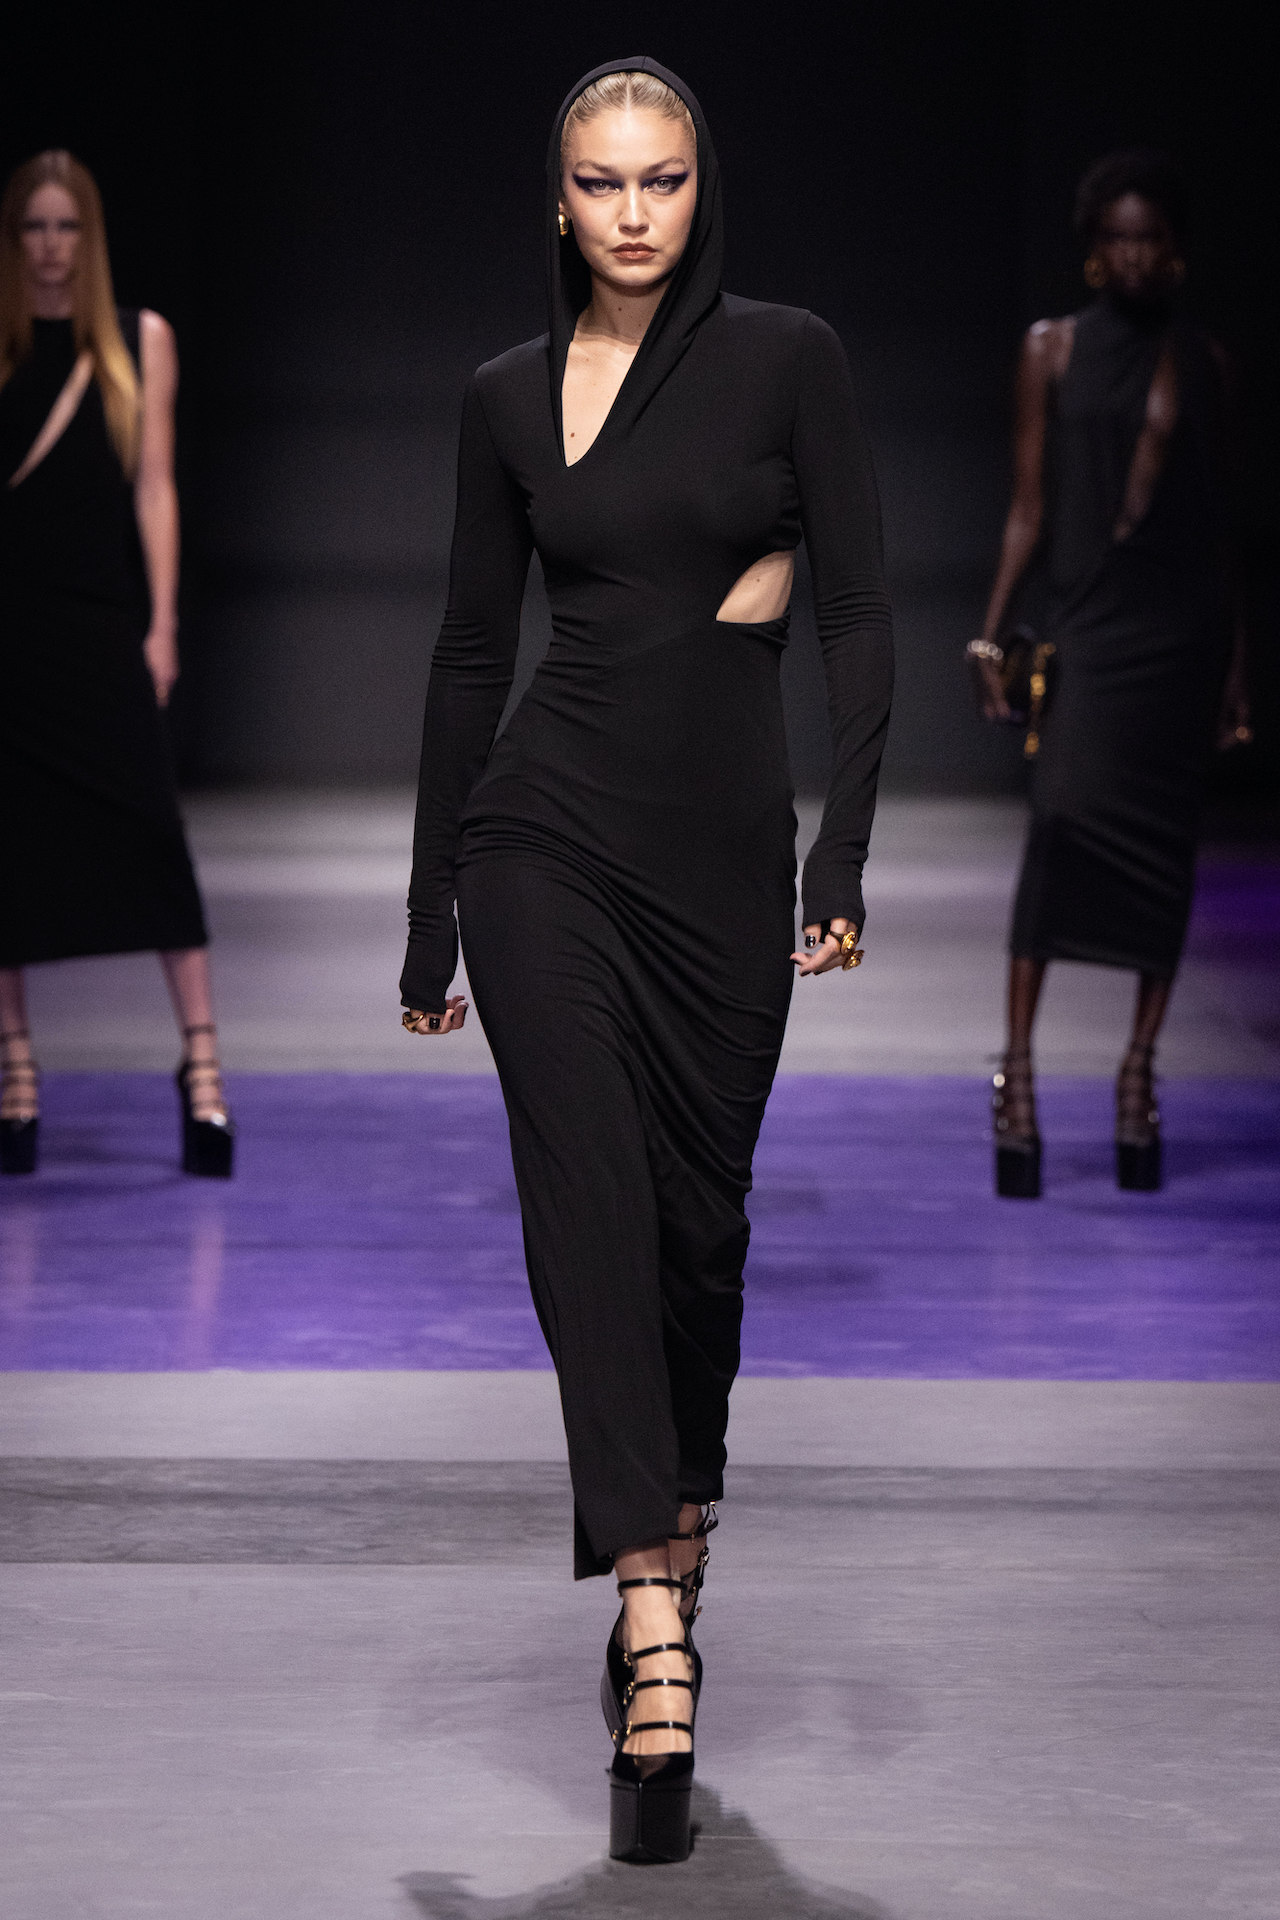 Gigi Hadid Returns to the Runway at Versace